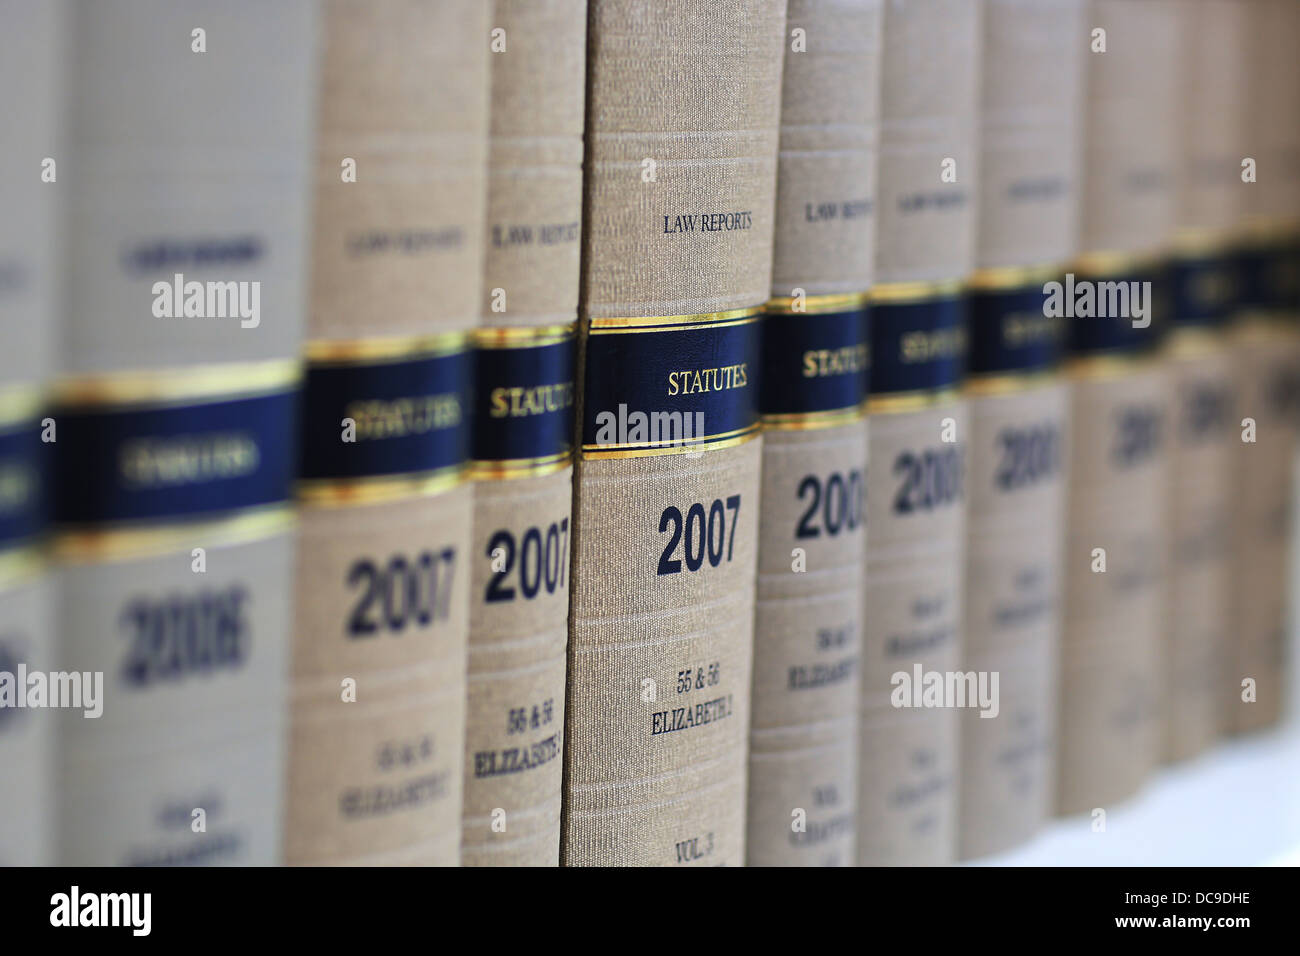 English Law statute books on a book shelf Stock Photo